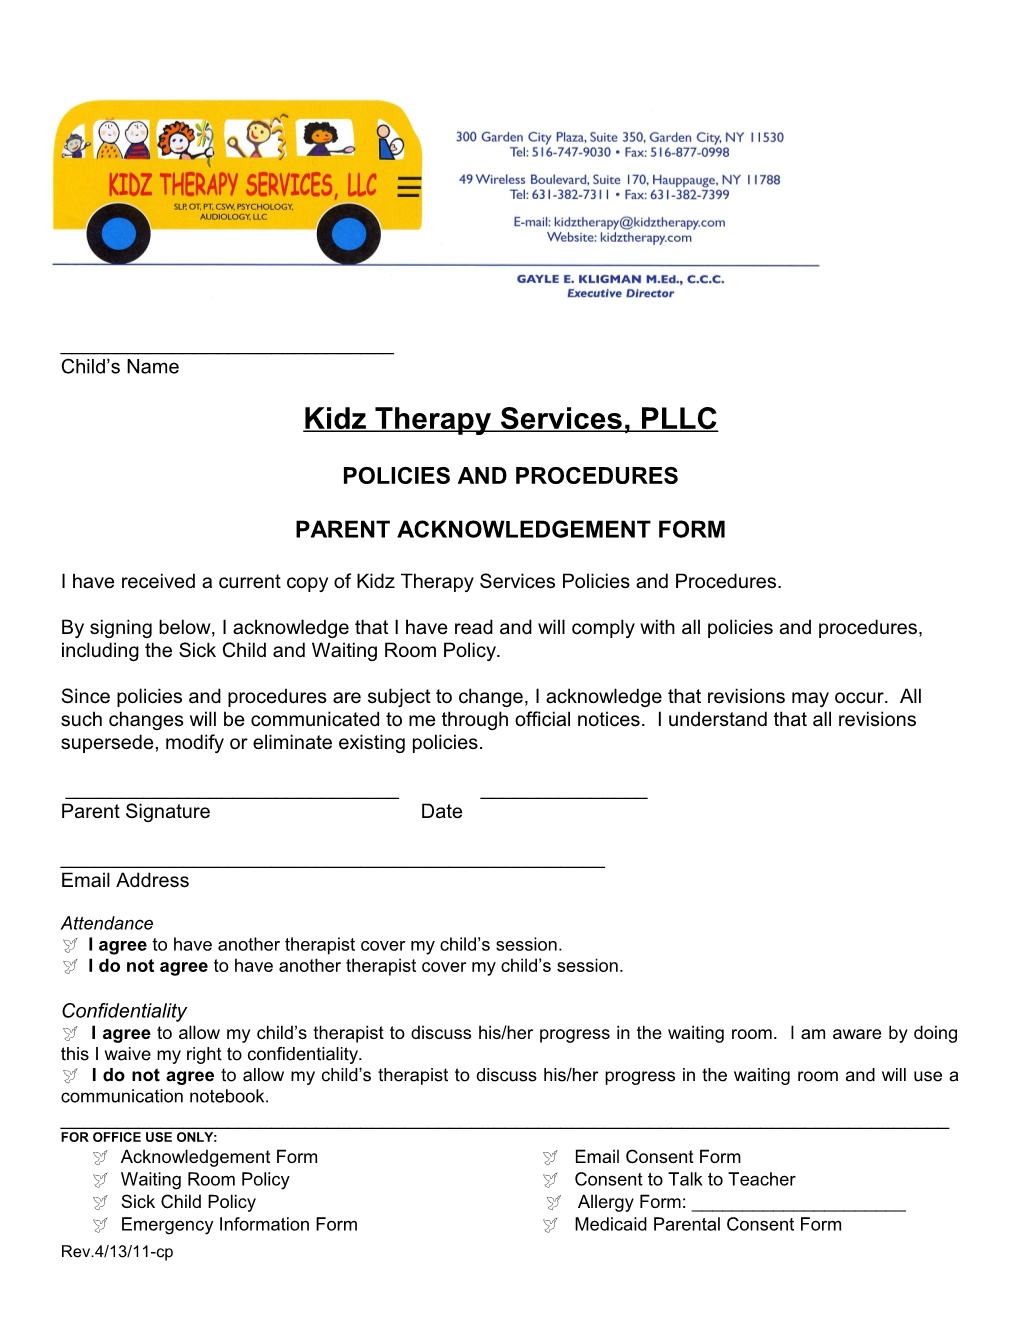 Kidz Therapy Services, PLLC